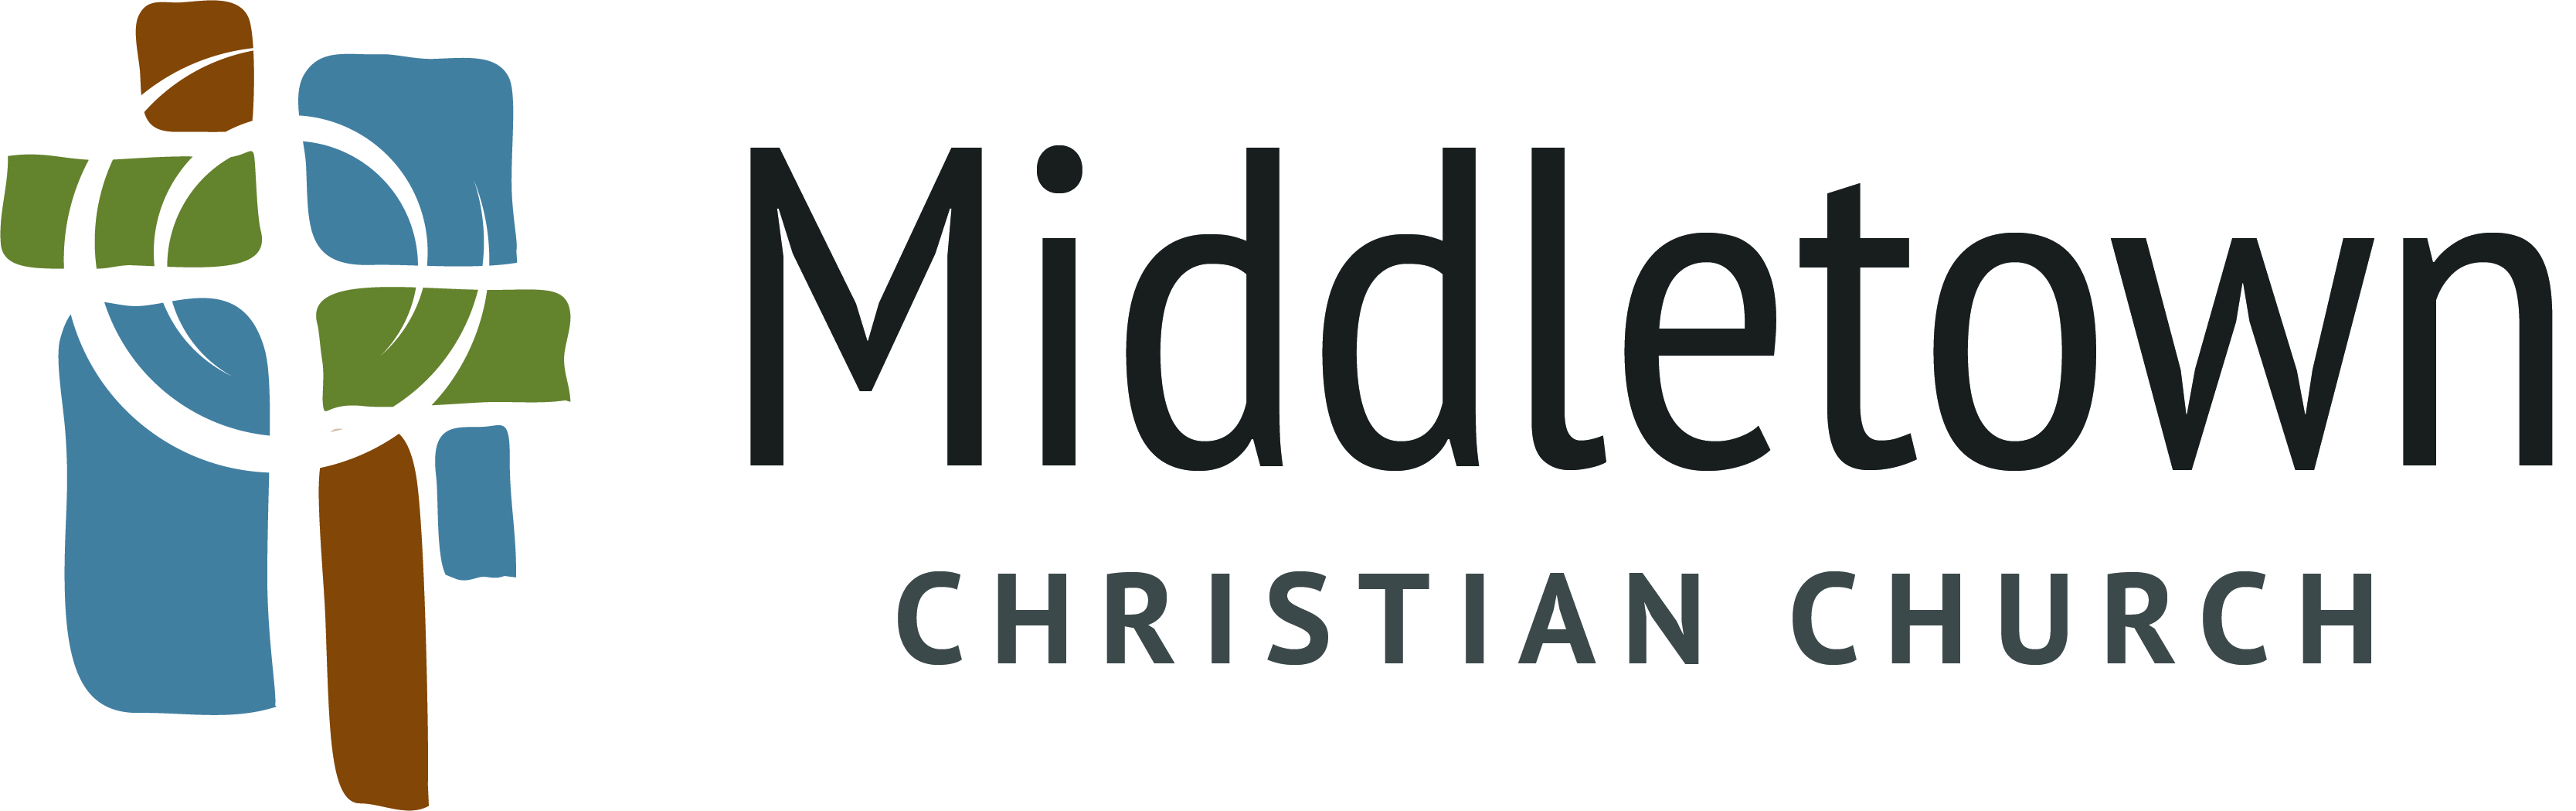 Middletown-logo-FINAL